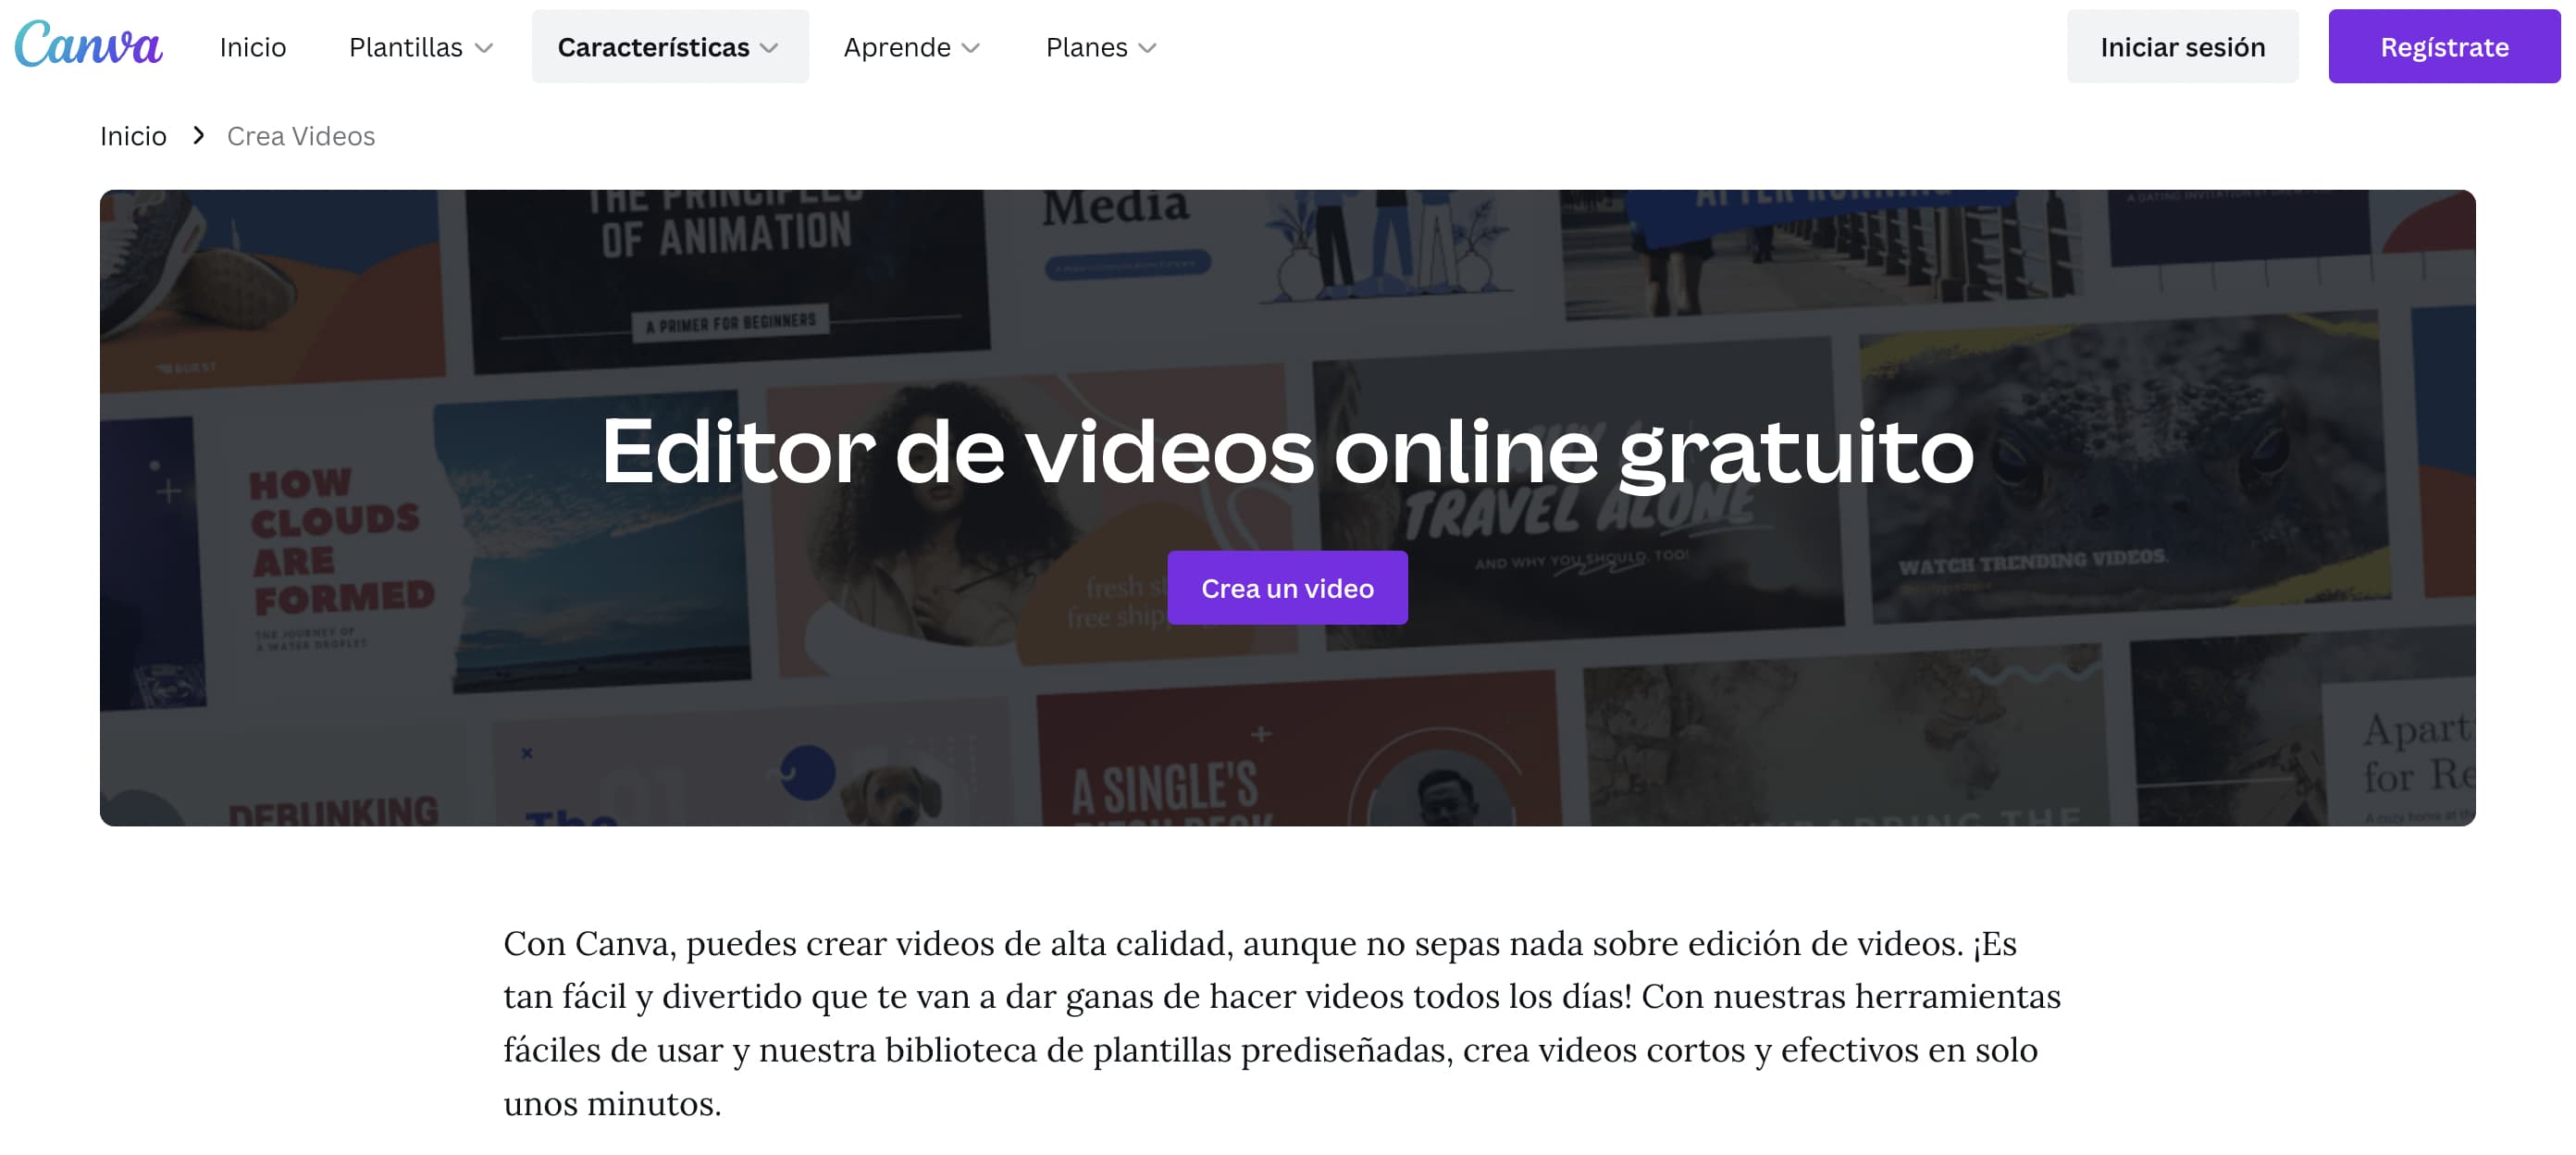 Editor de video online gratuito: Canva